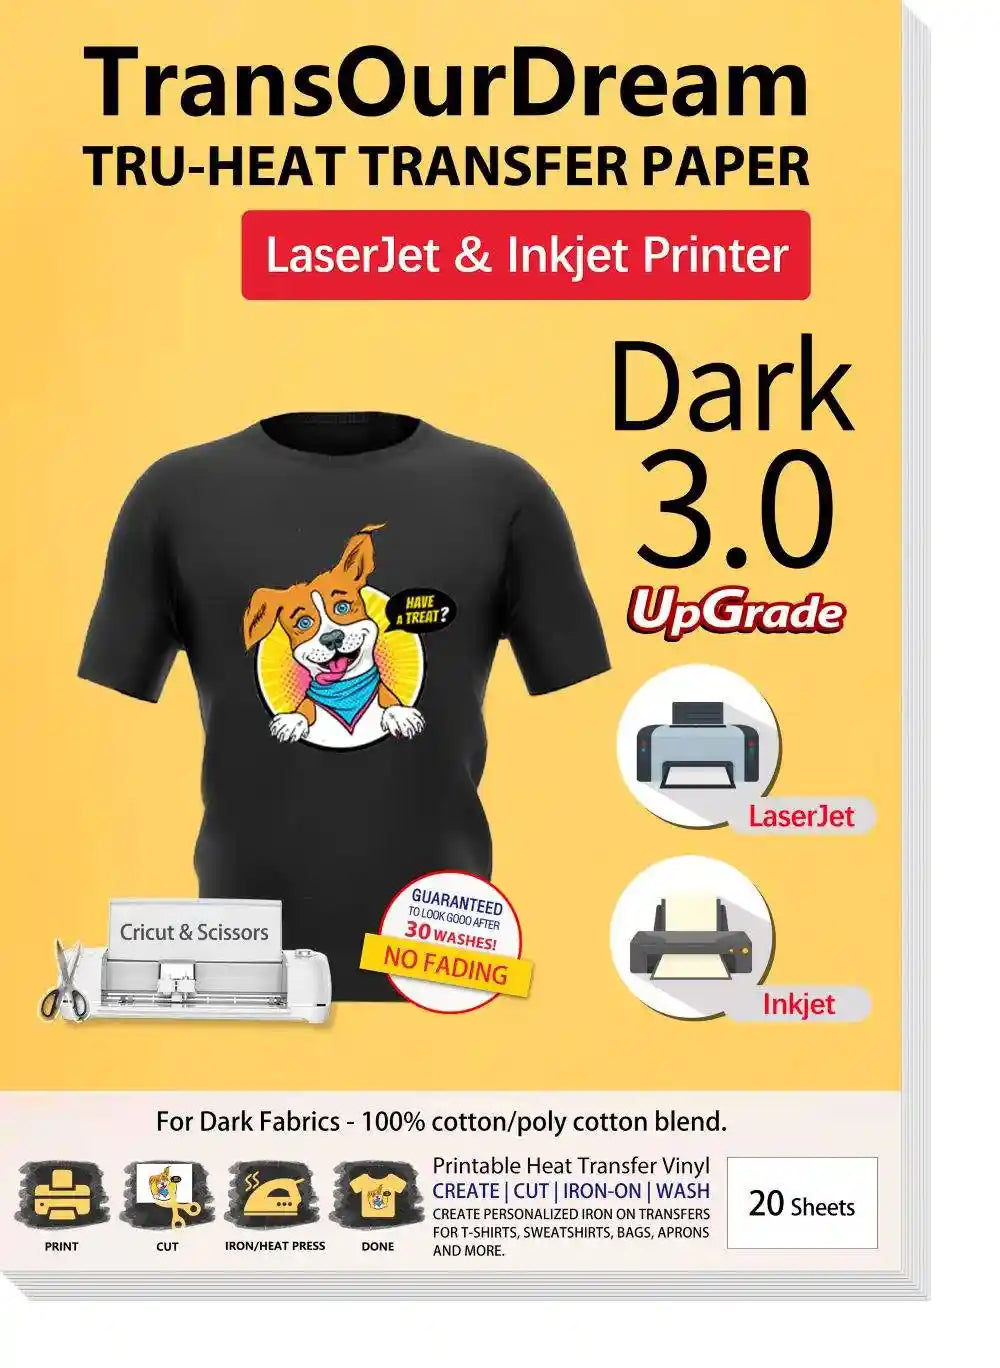 Heat Transfer Paper Upgraded for Dark T-shirts & Fabrics - TransOurDream